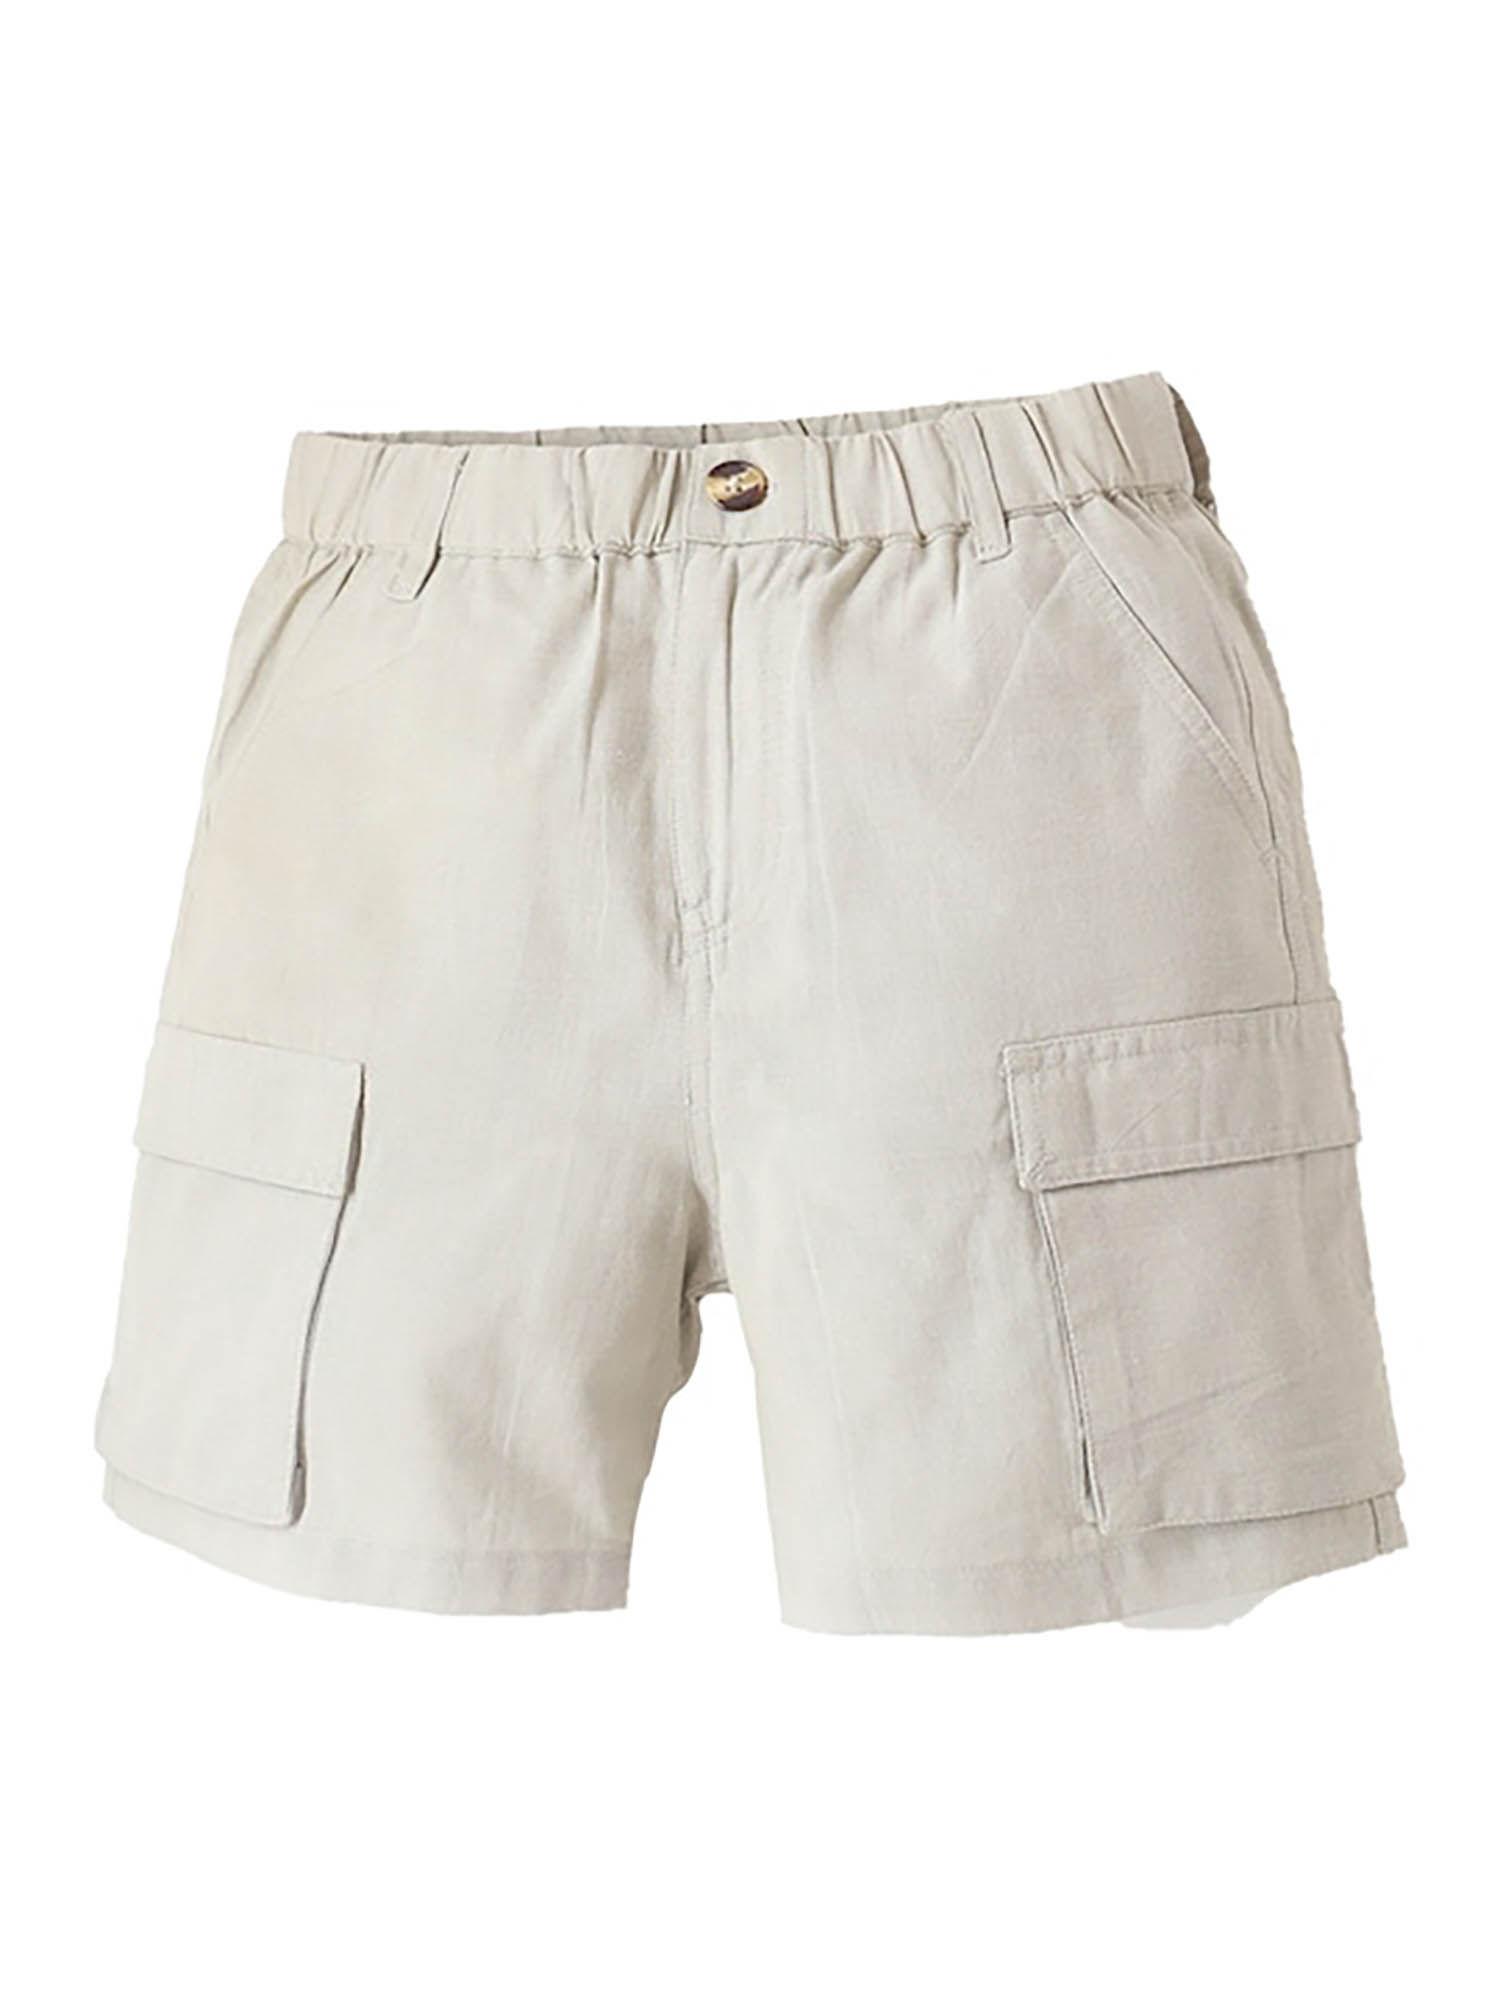 smart casual cotton khaki knee length shorts for boys